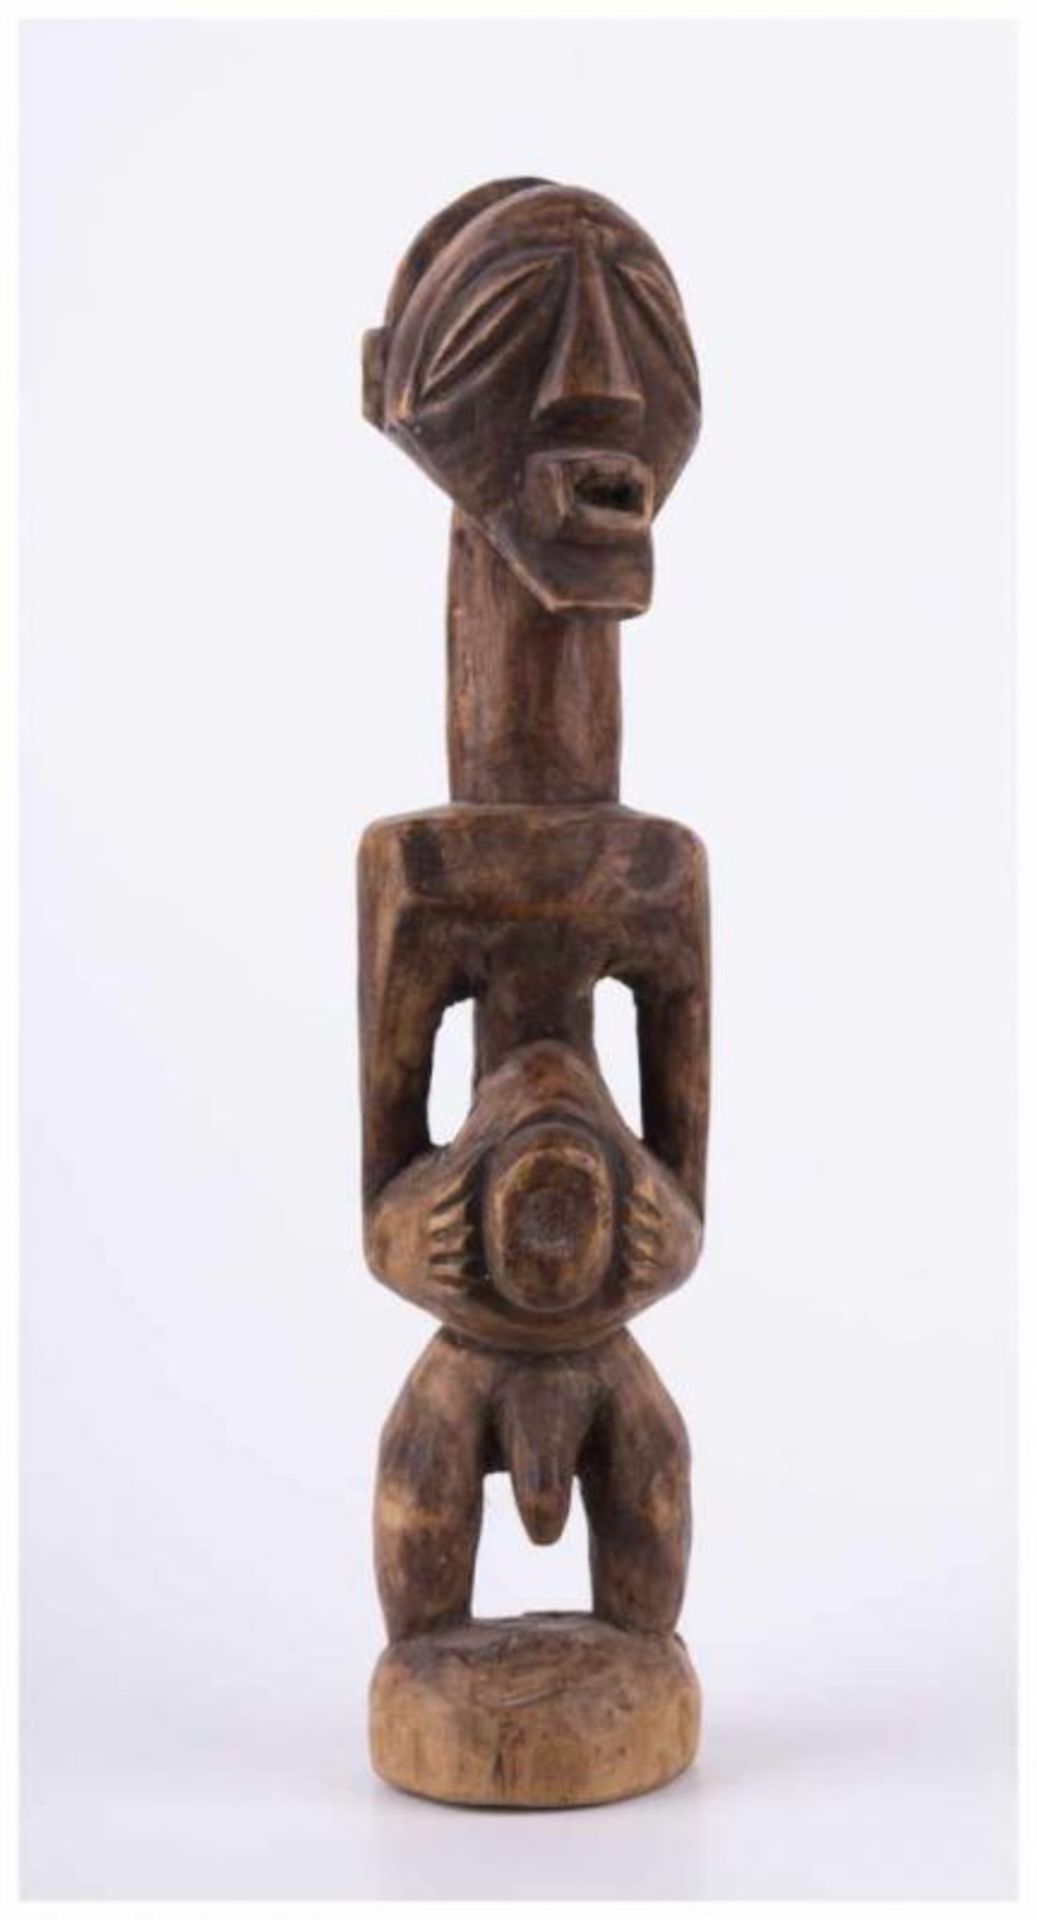 Fruchtbarkeits- Figur Afrika / Fertility figure, Africa - Holz, H: 29,5 cm - [...] - Bild 2 aus 8